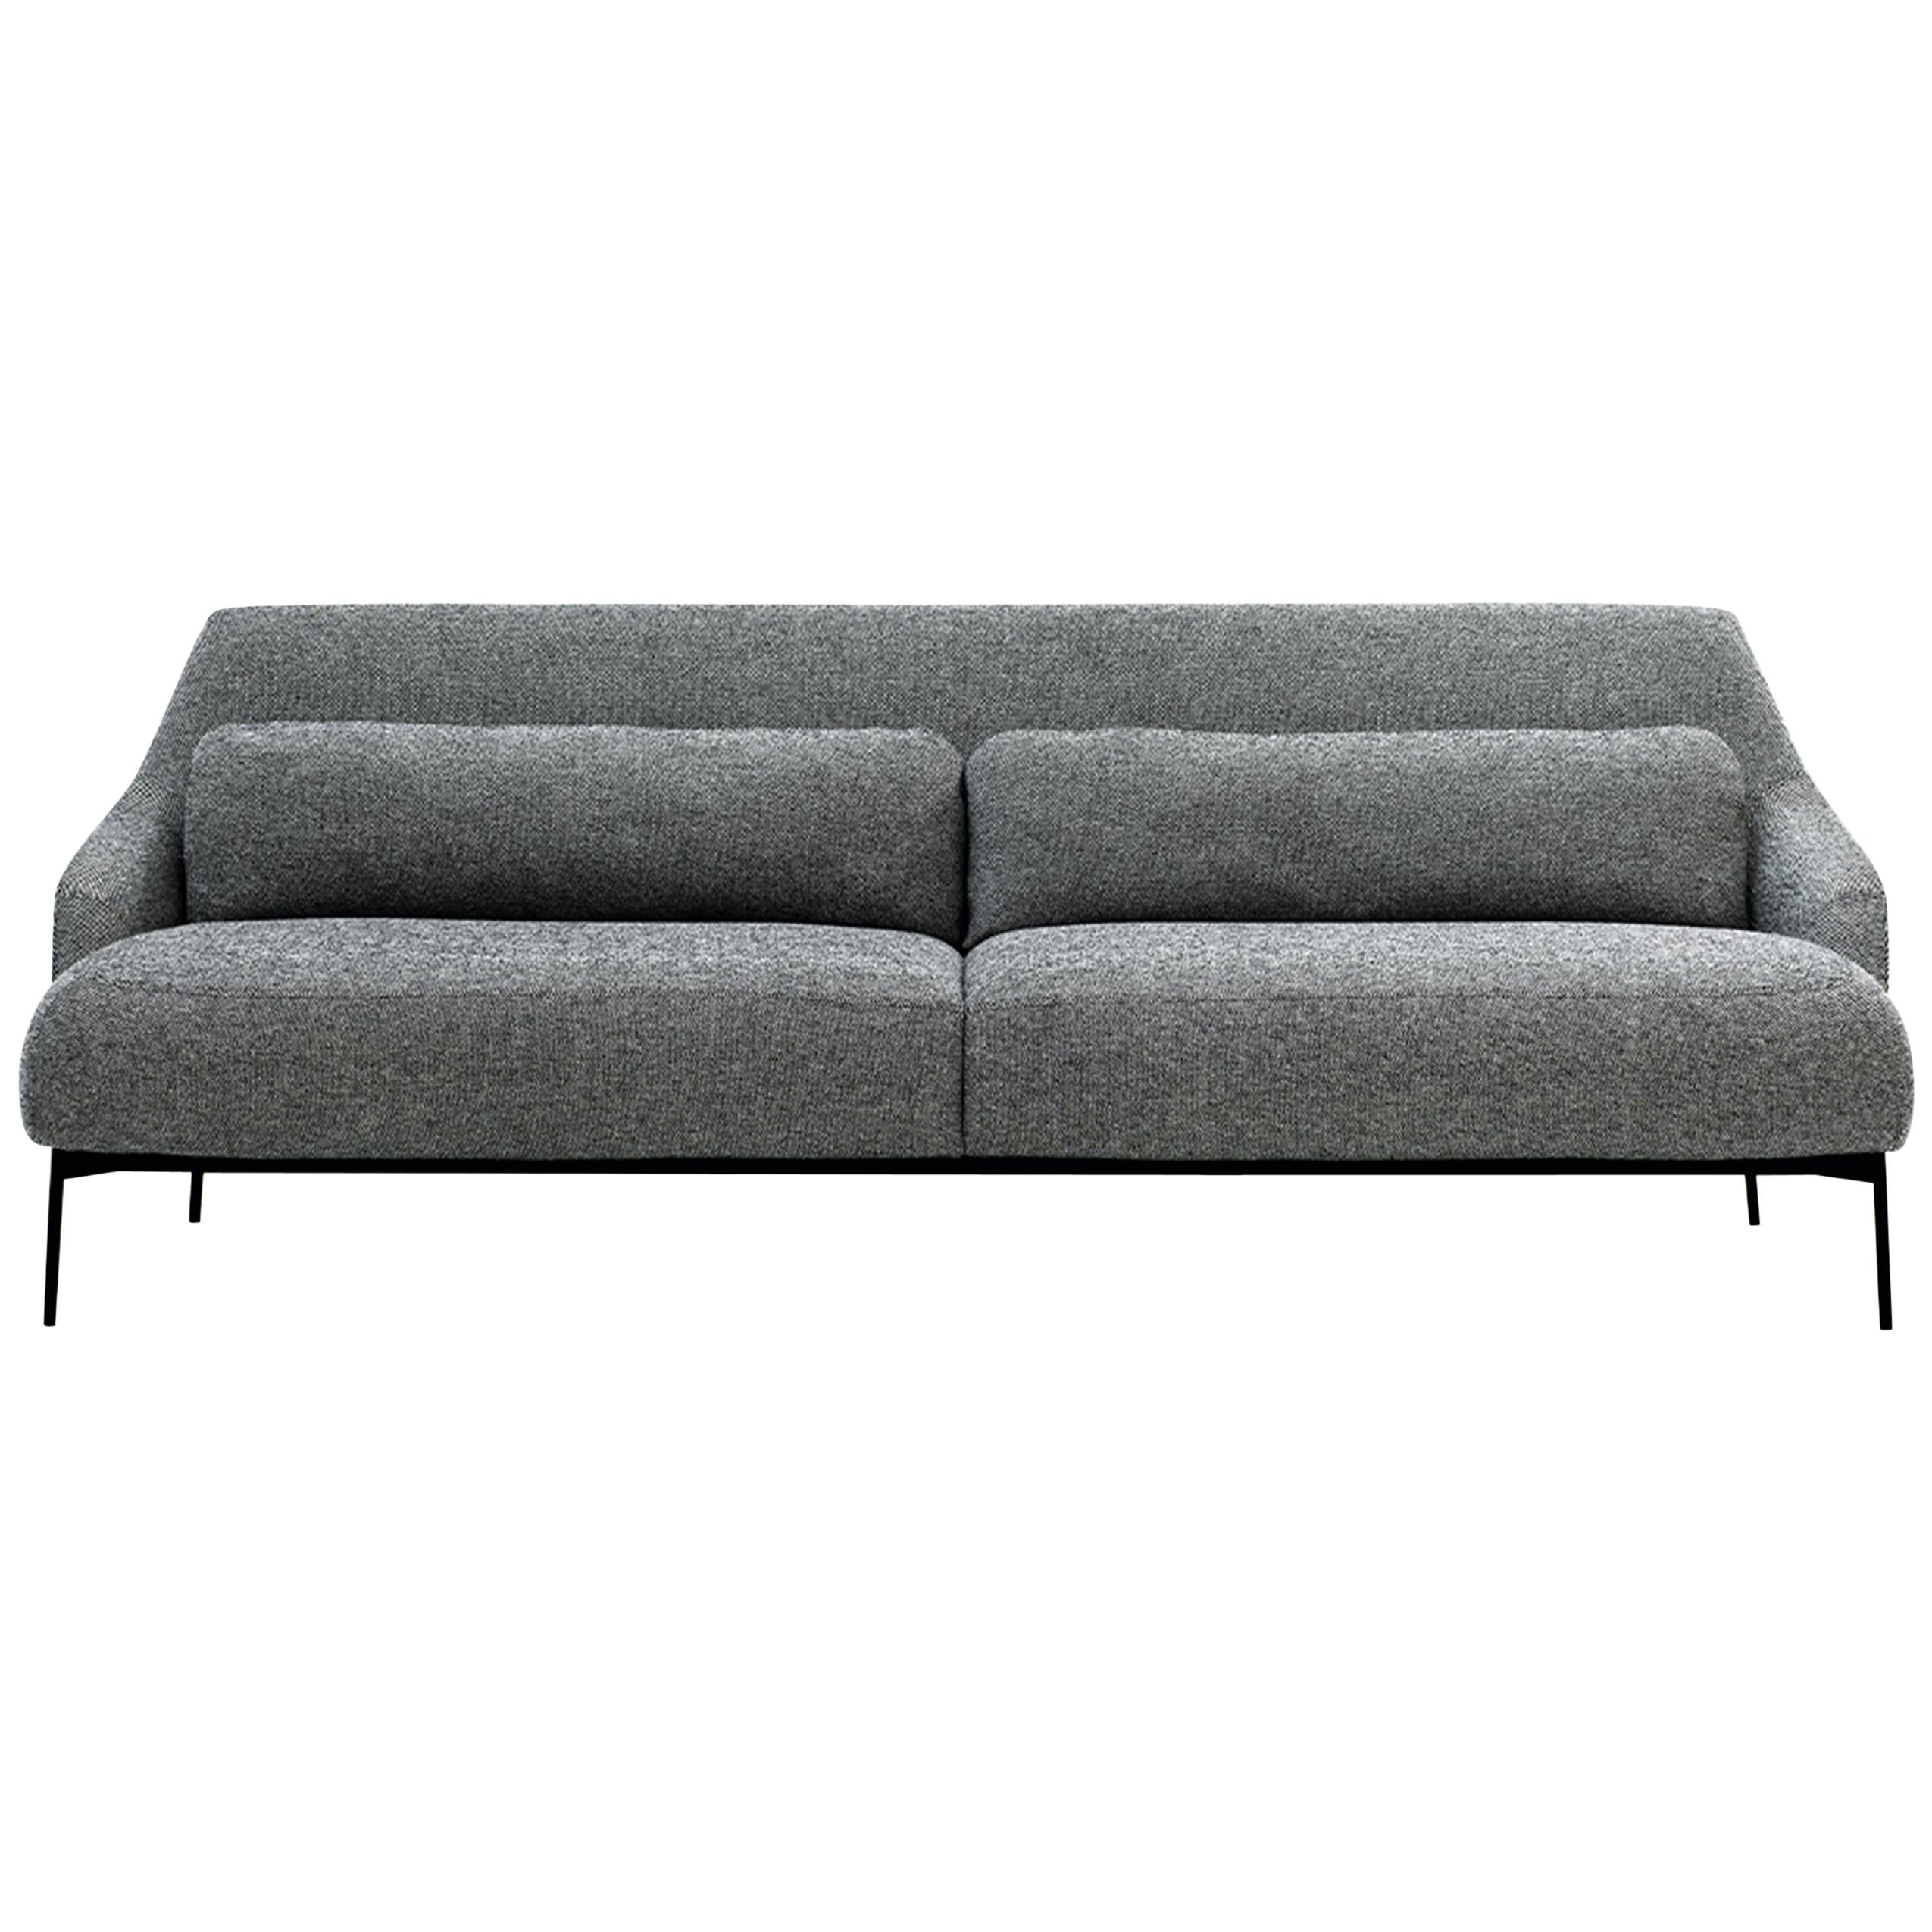 Anpassbares Tacchini Lima-Sofa, entworfen von Claesson Koivisto Rune im Angebot